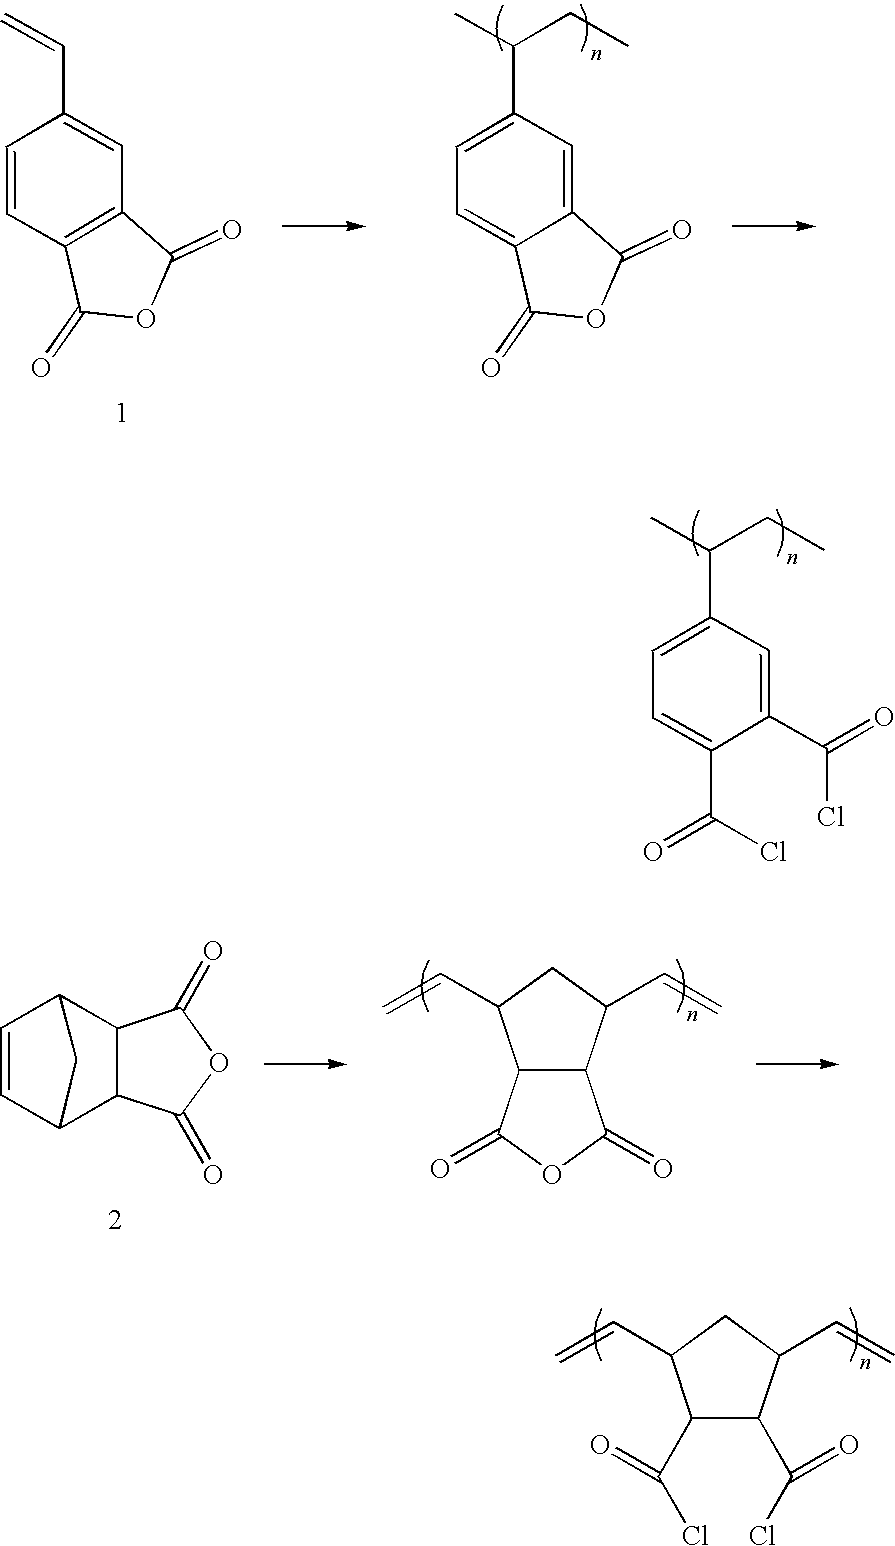 Radiosynthesis of acid chlorides